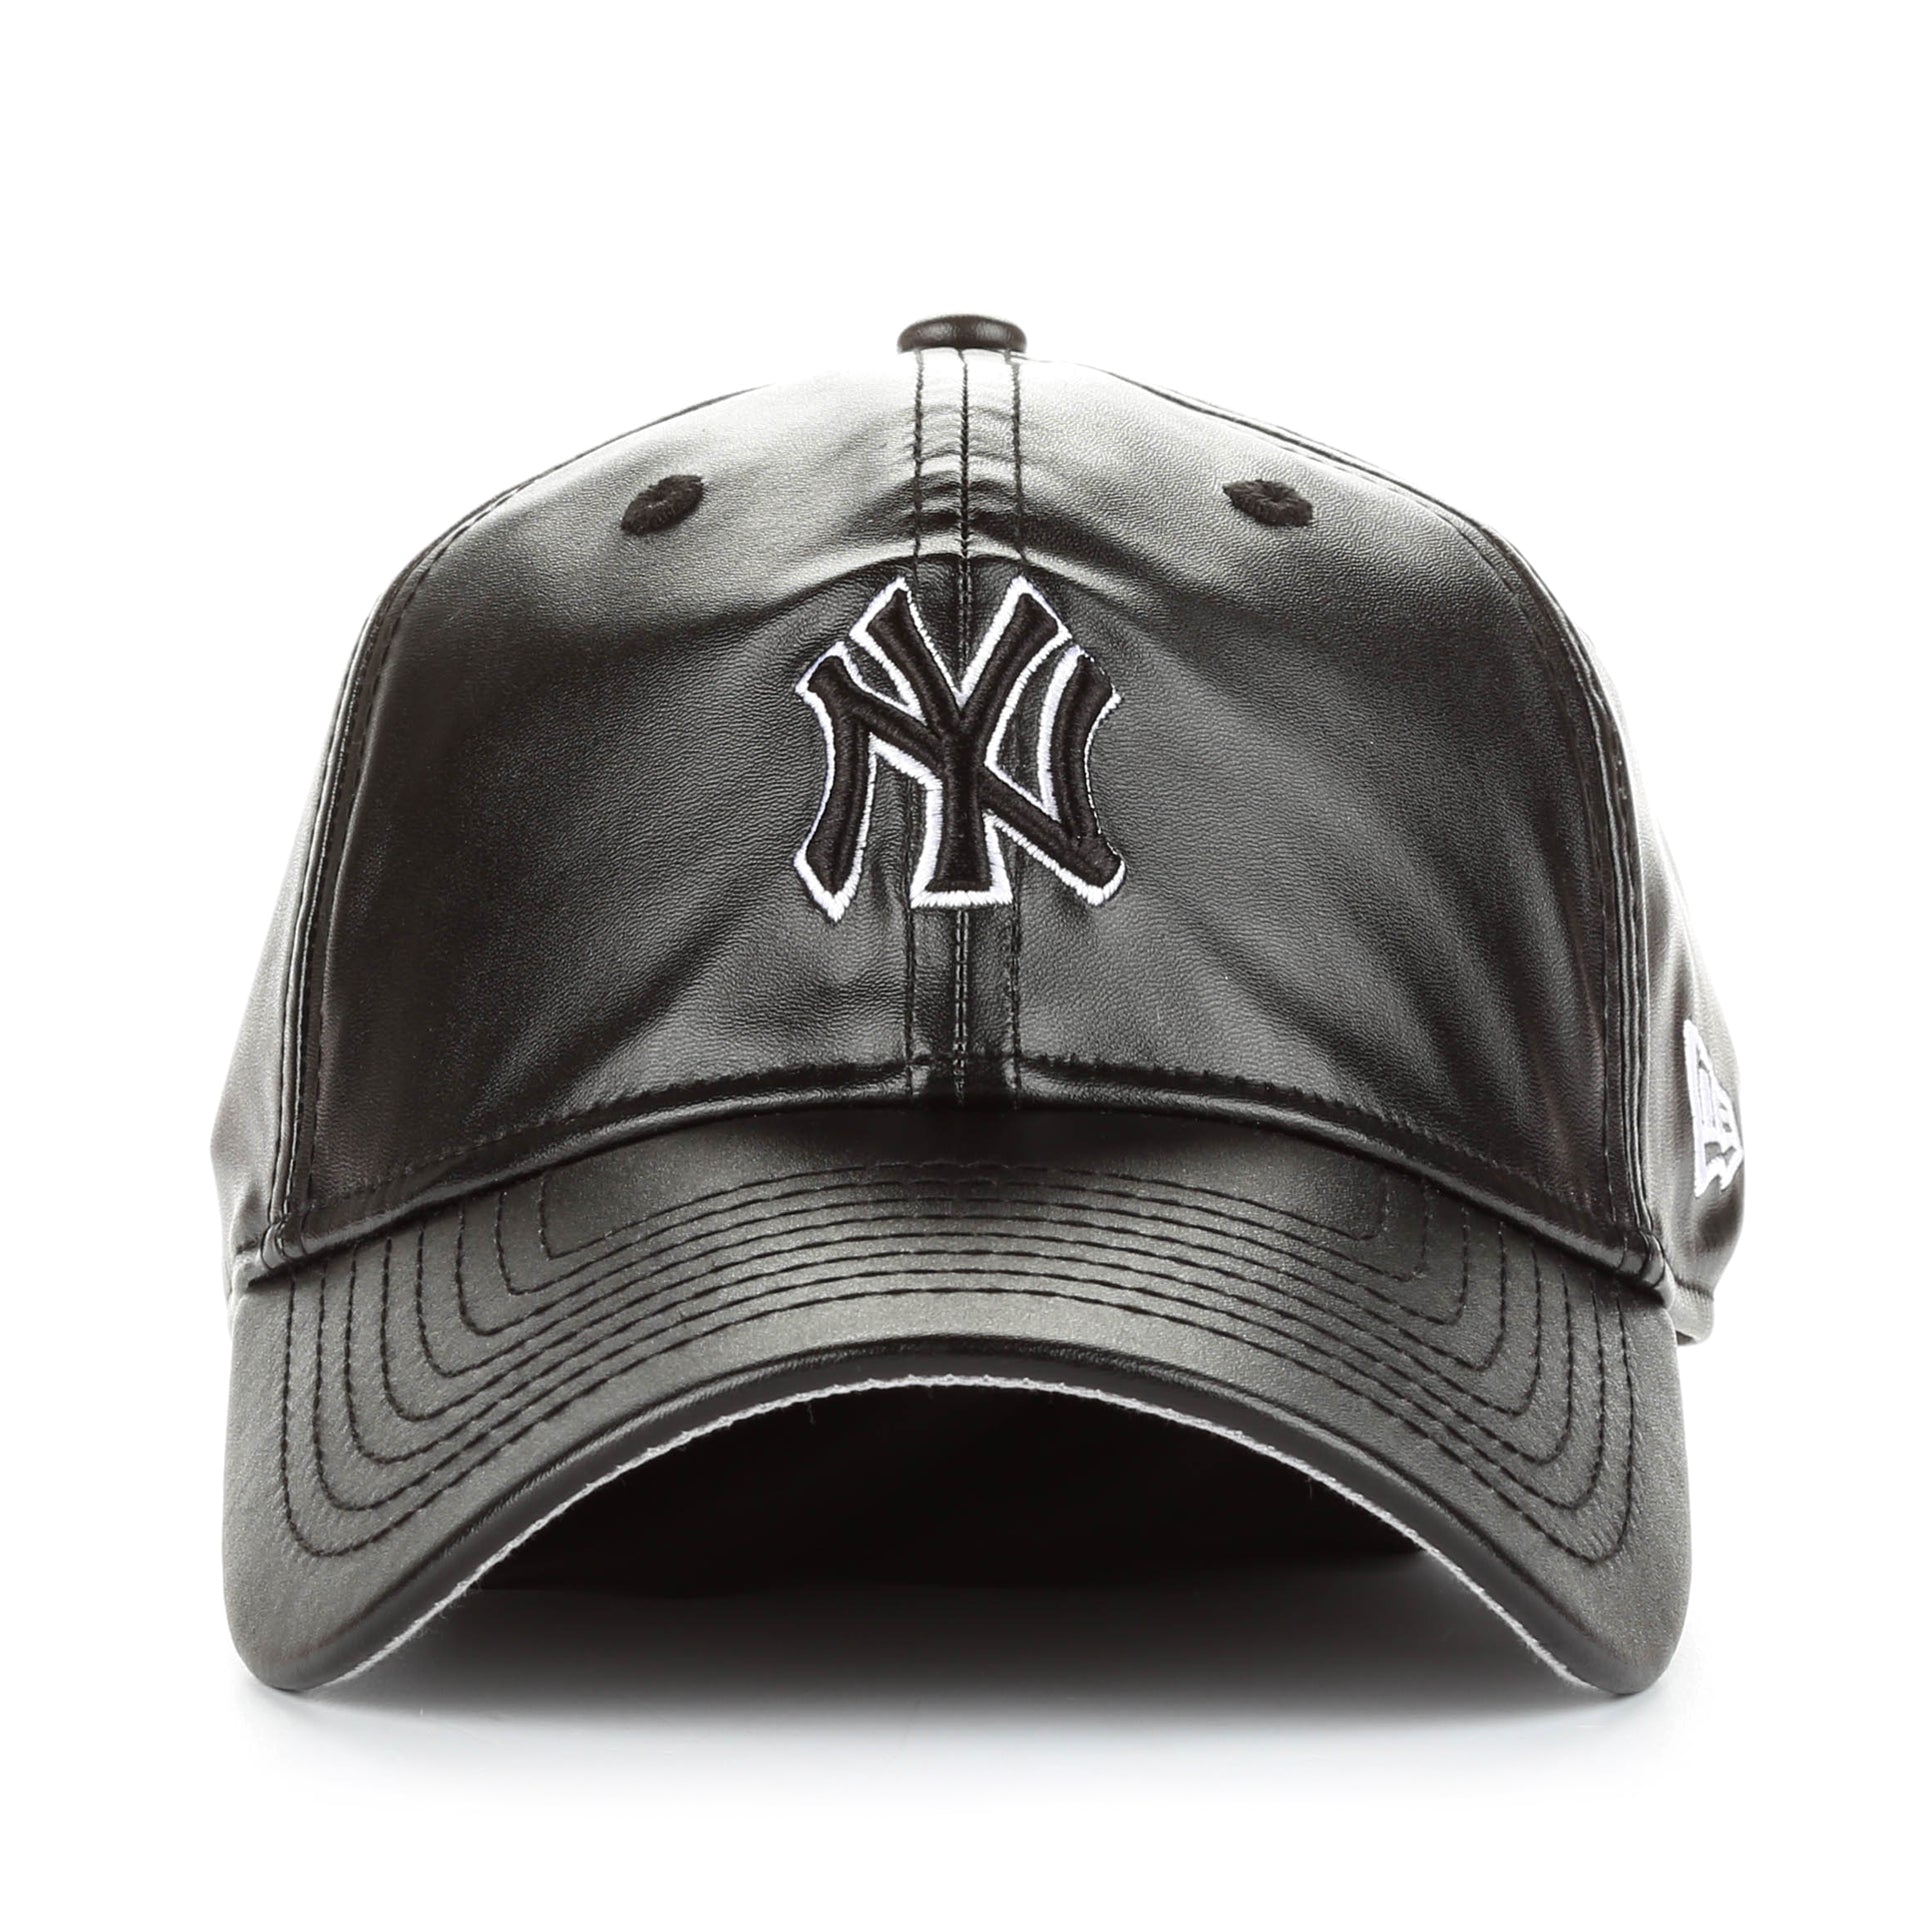 New Era 9Twenty PU Leather Squad Cap - New York Yankees/Black